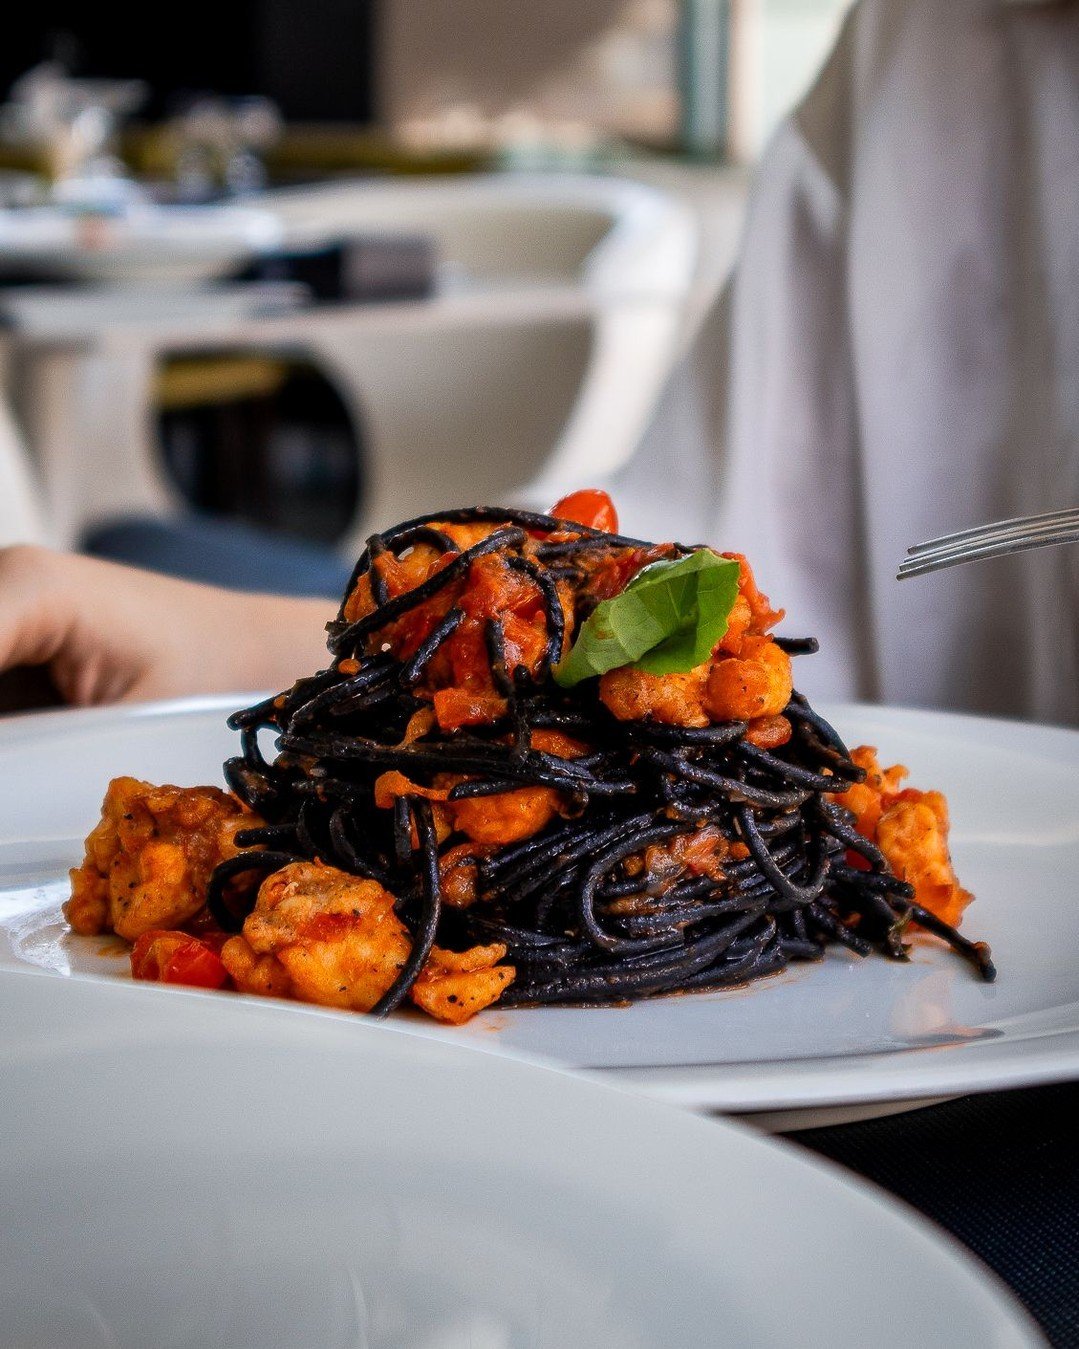 Presenting our Spaghetti Al Nero Di Seppia - delicately perfect. 

To reserve, tap the link in our bio

#Oliveto #EnhanceYourSenses #Italian #Restaurant #Bahrain #KSA #Khobar #Dammam #Kuwait #Lounge #Livemusic #Foodie